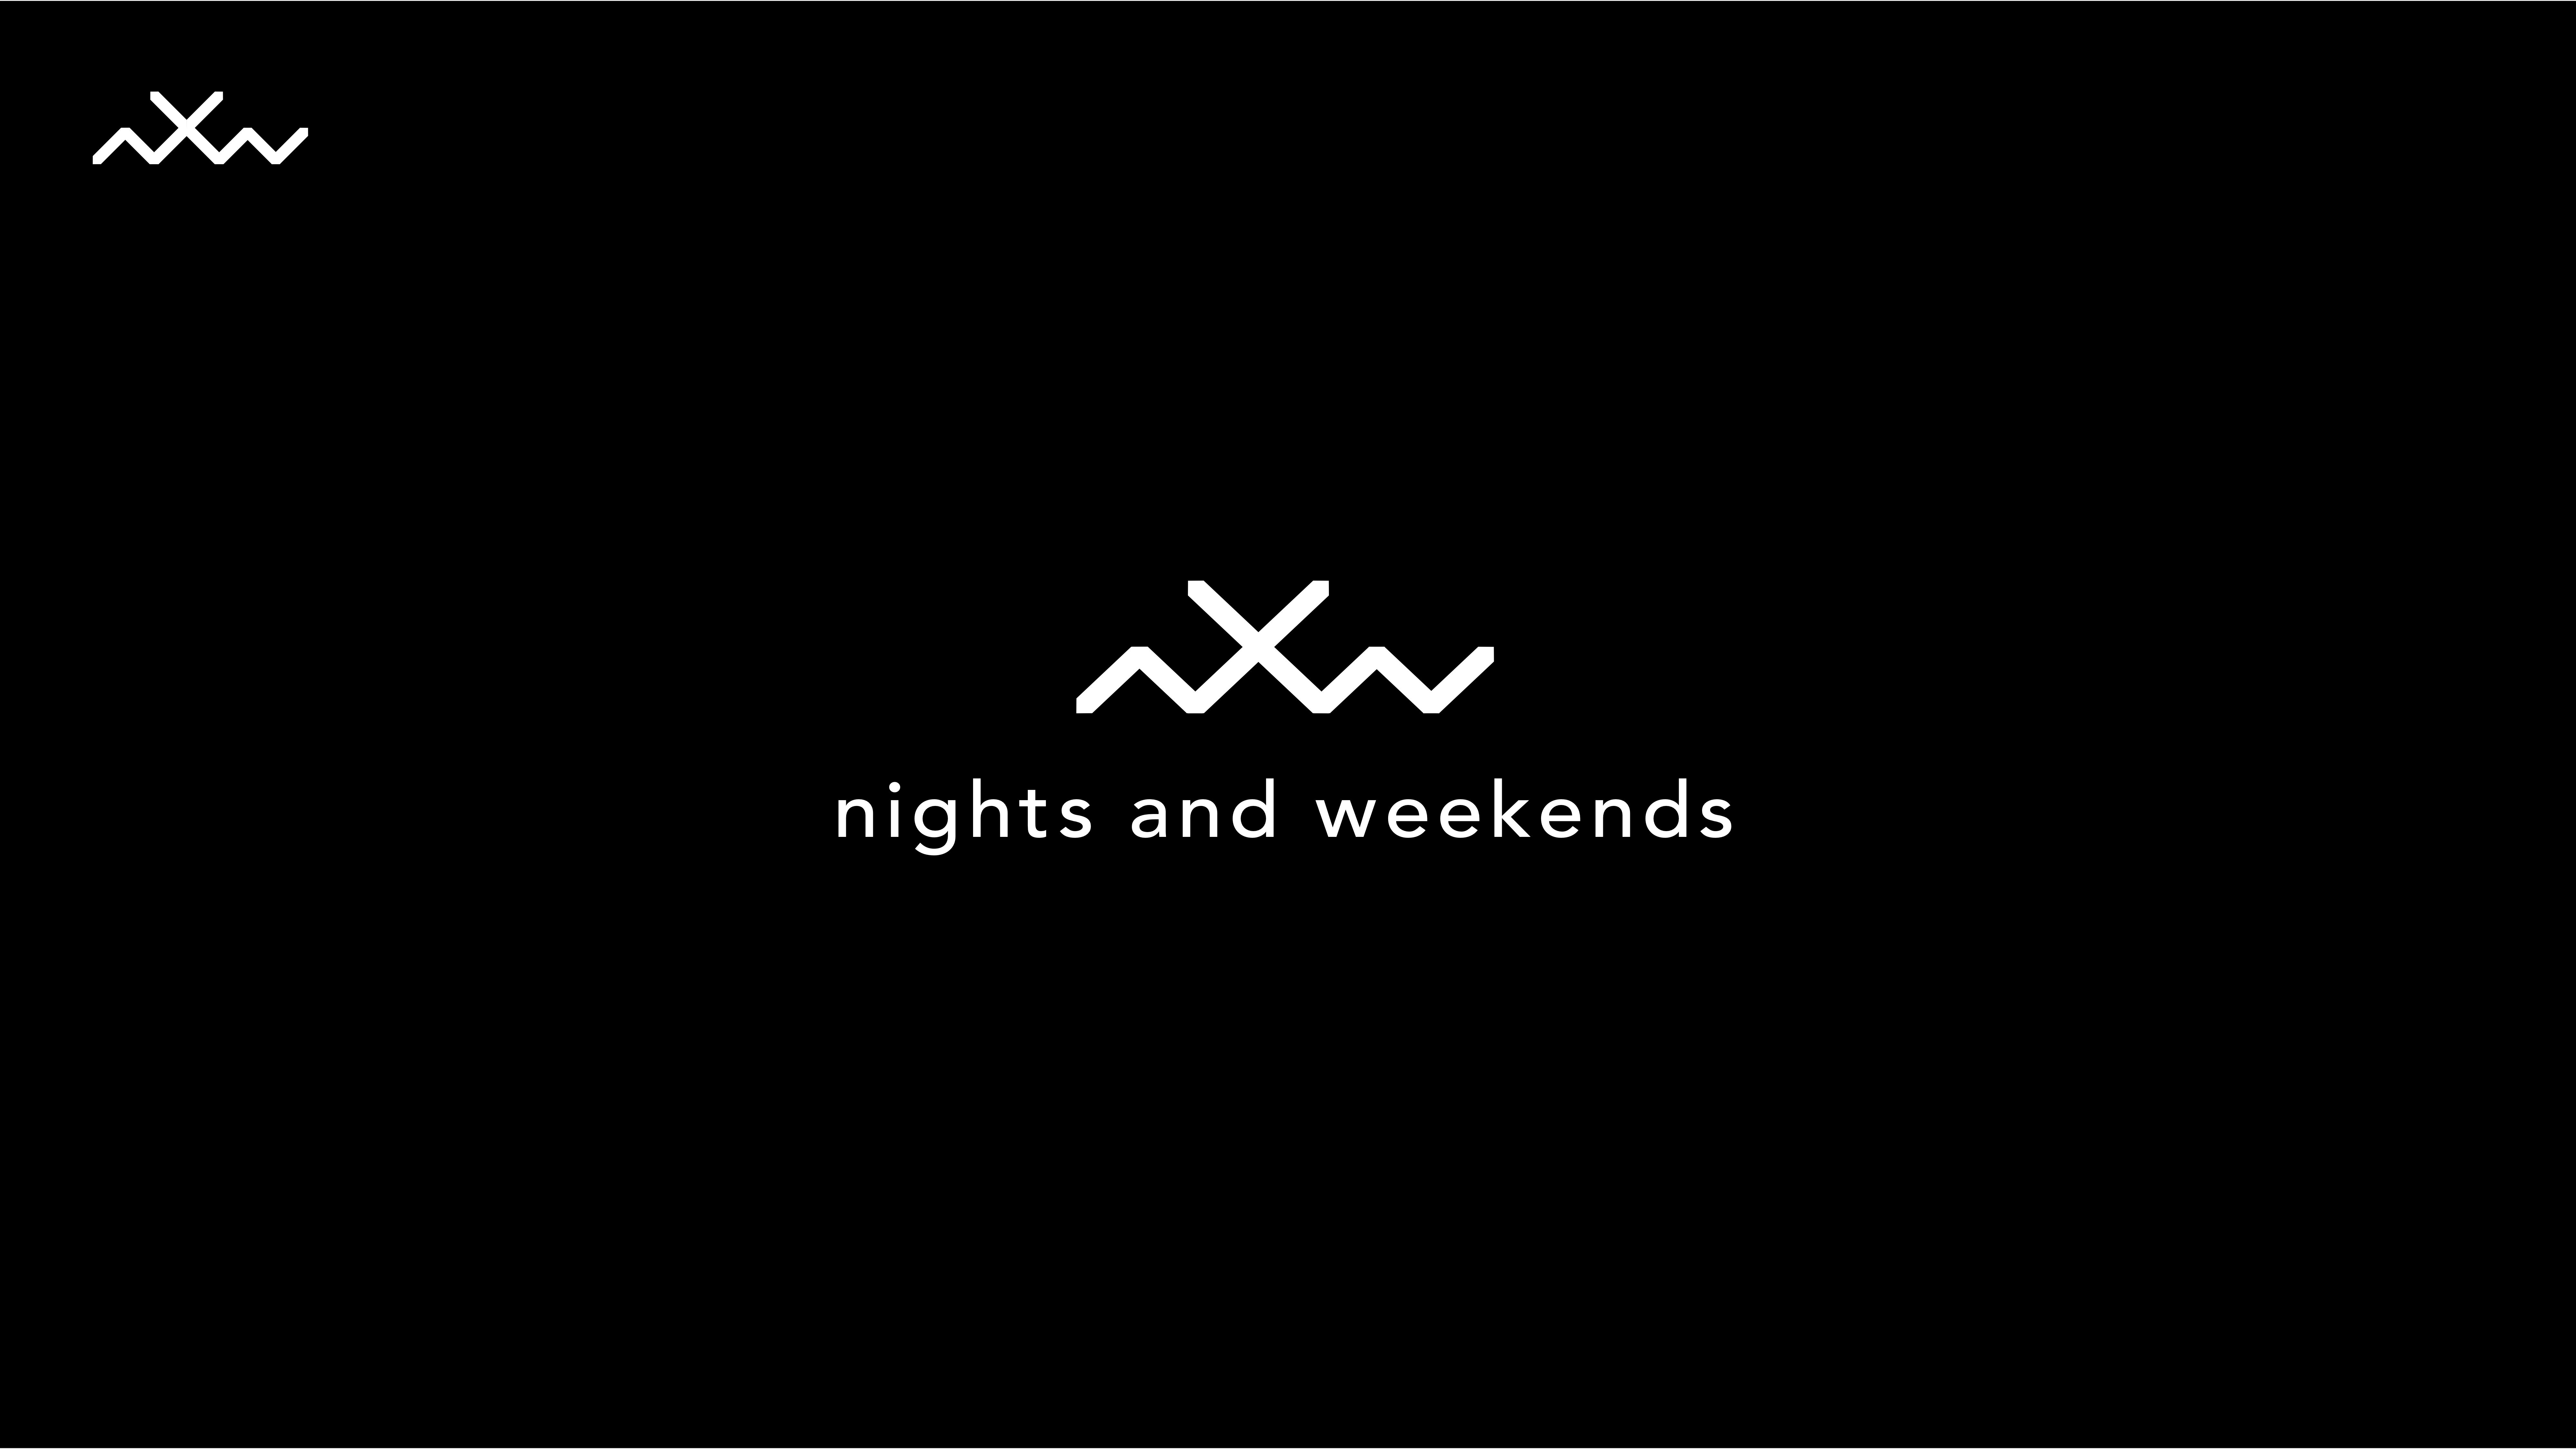 NightsxWeekends-4